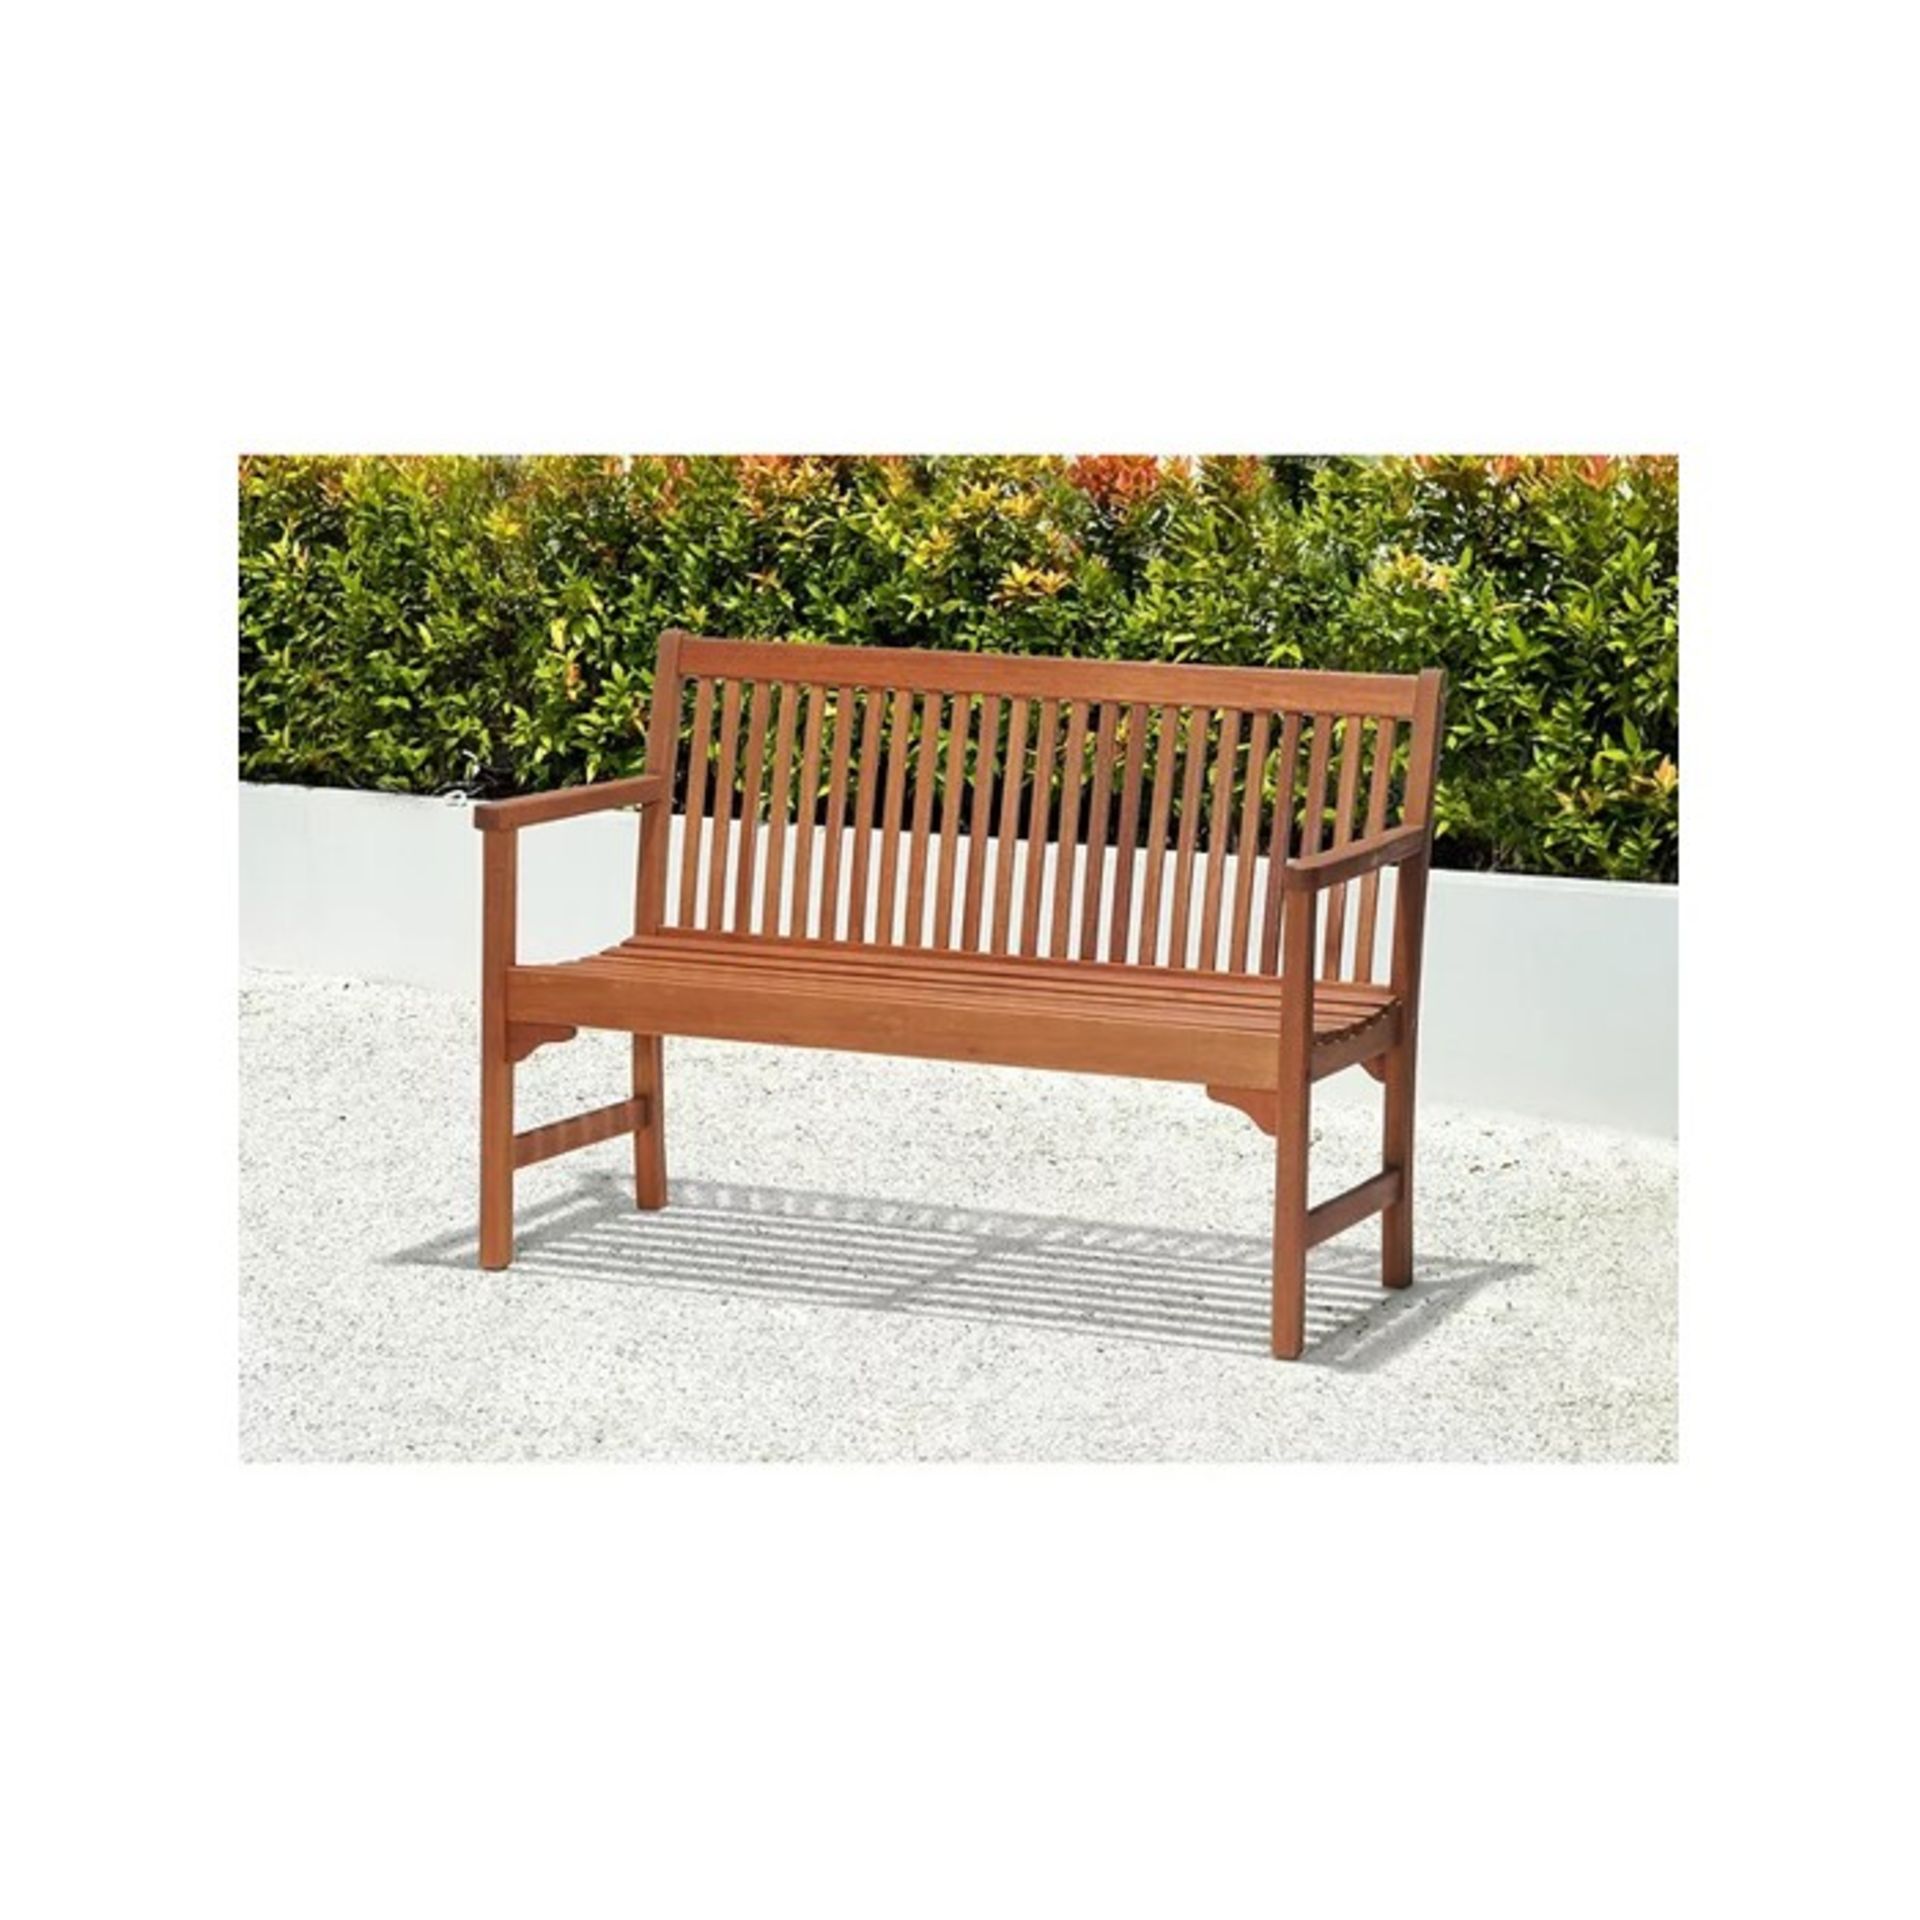 BRAND NEW JOHN LEWIS 2-Seater Garden Bench, FSC-Certified (Eucalyptus Wood), Natural. RRP £253.50. - Image 4 of 4